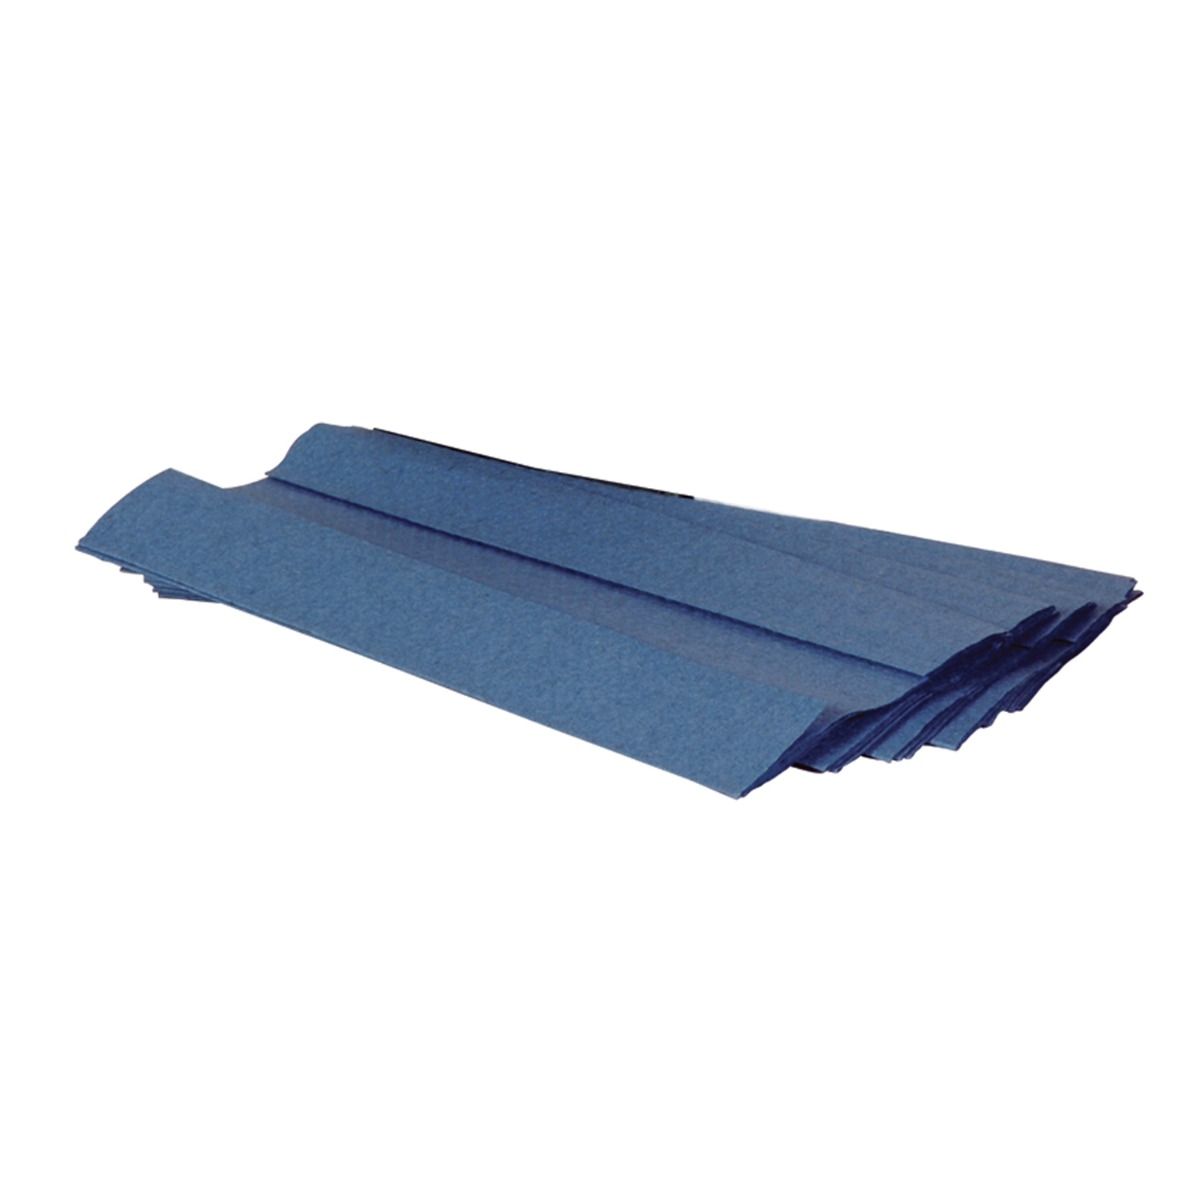 Jangro Blue Centrefold Hand Towel, Case of 2850 Towels